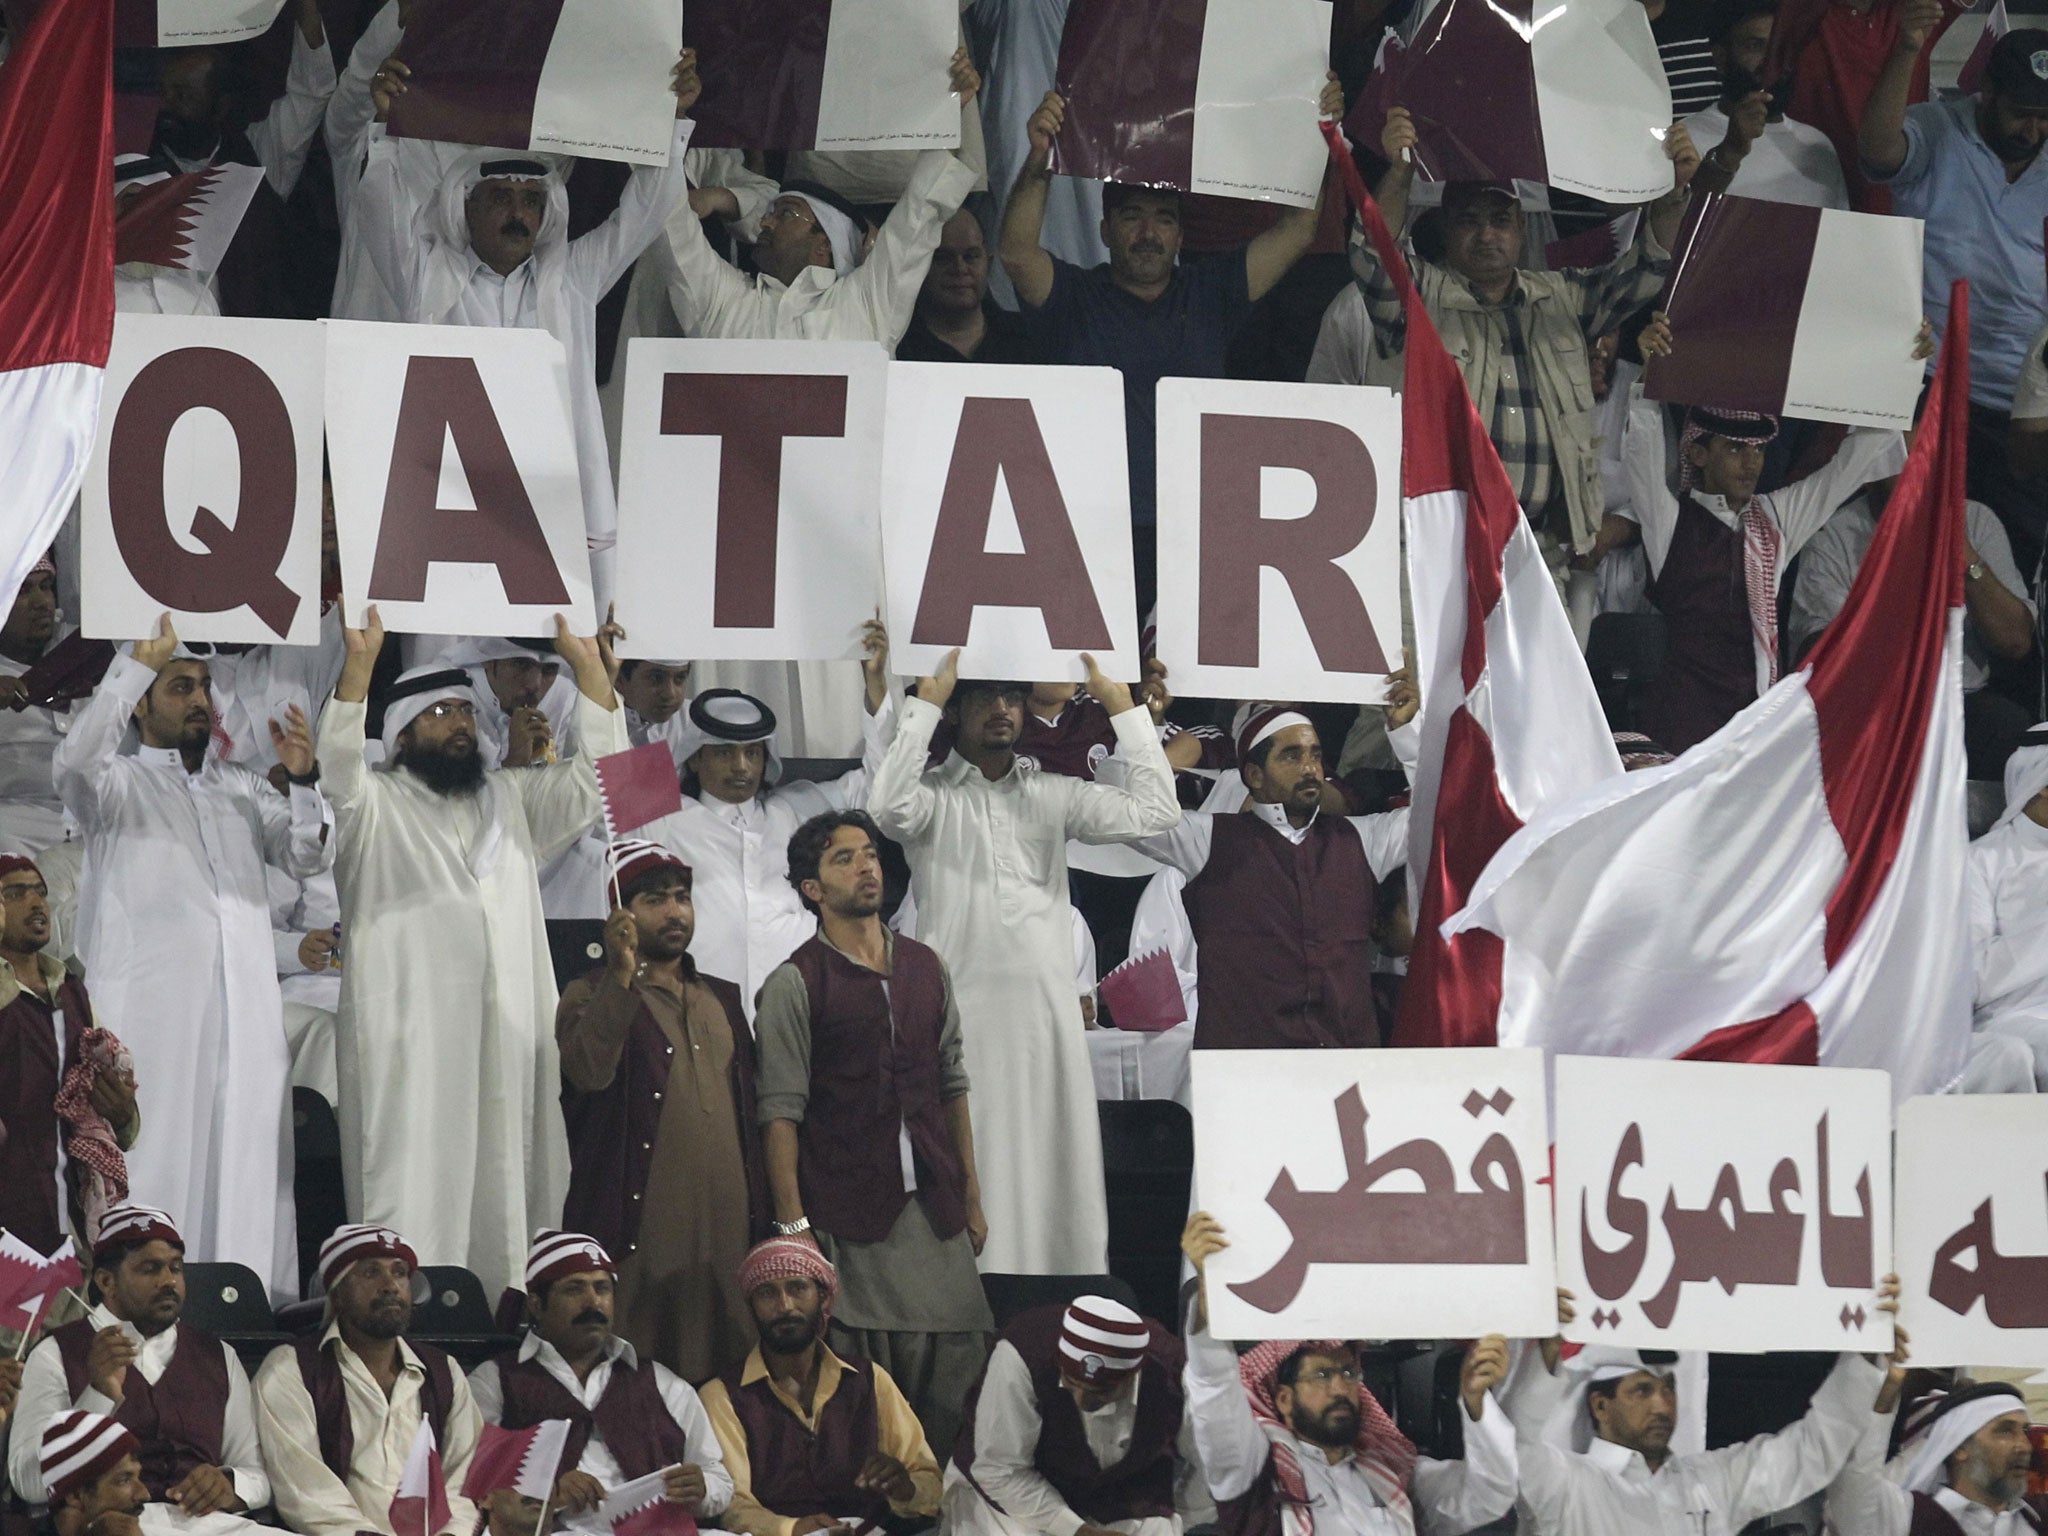 Qatari fans cheer their side on